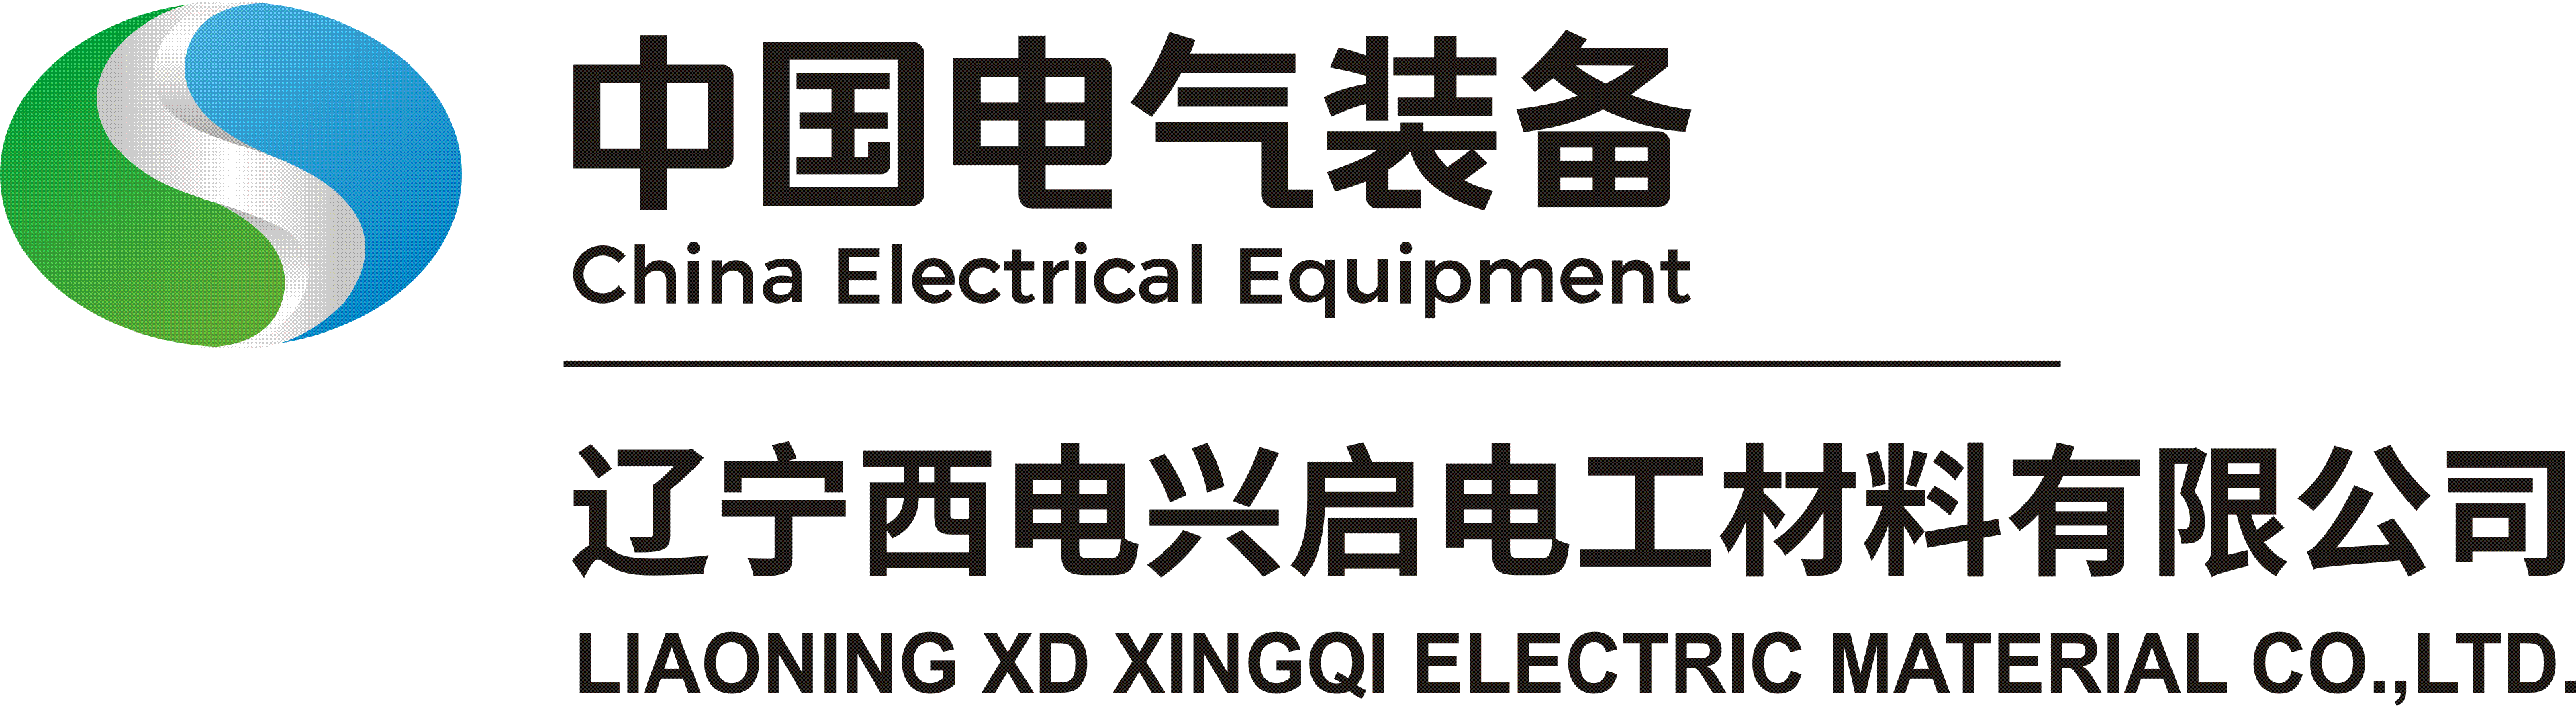 LiaoningXD Xingqi Electric Material Co.,Ltd